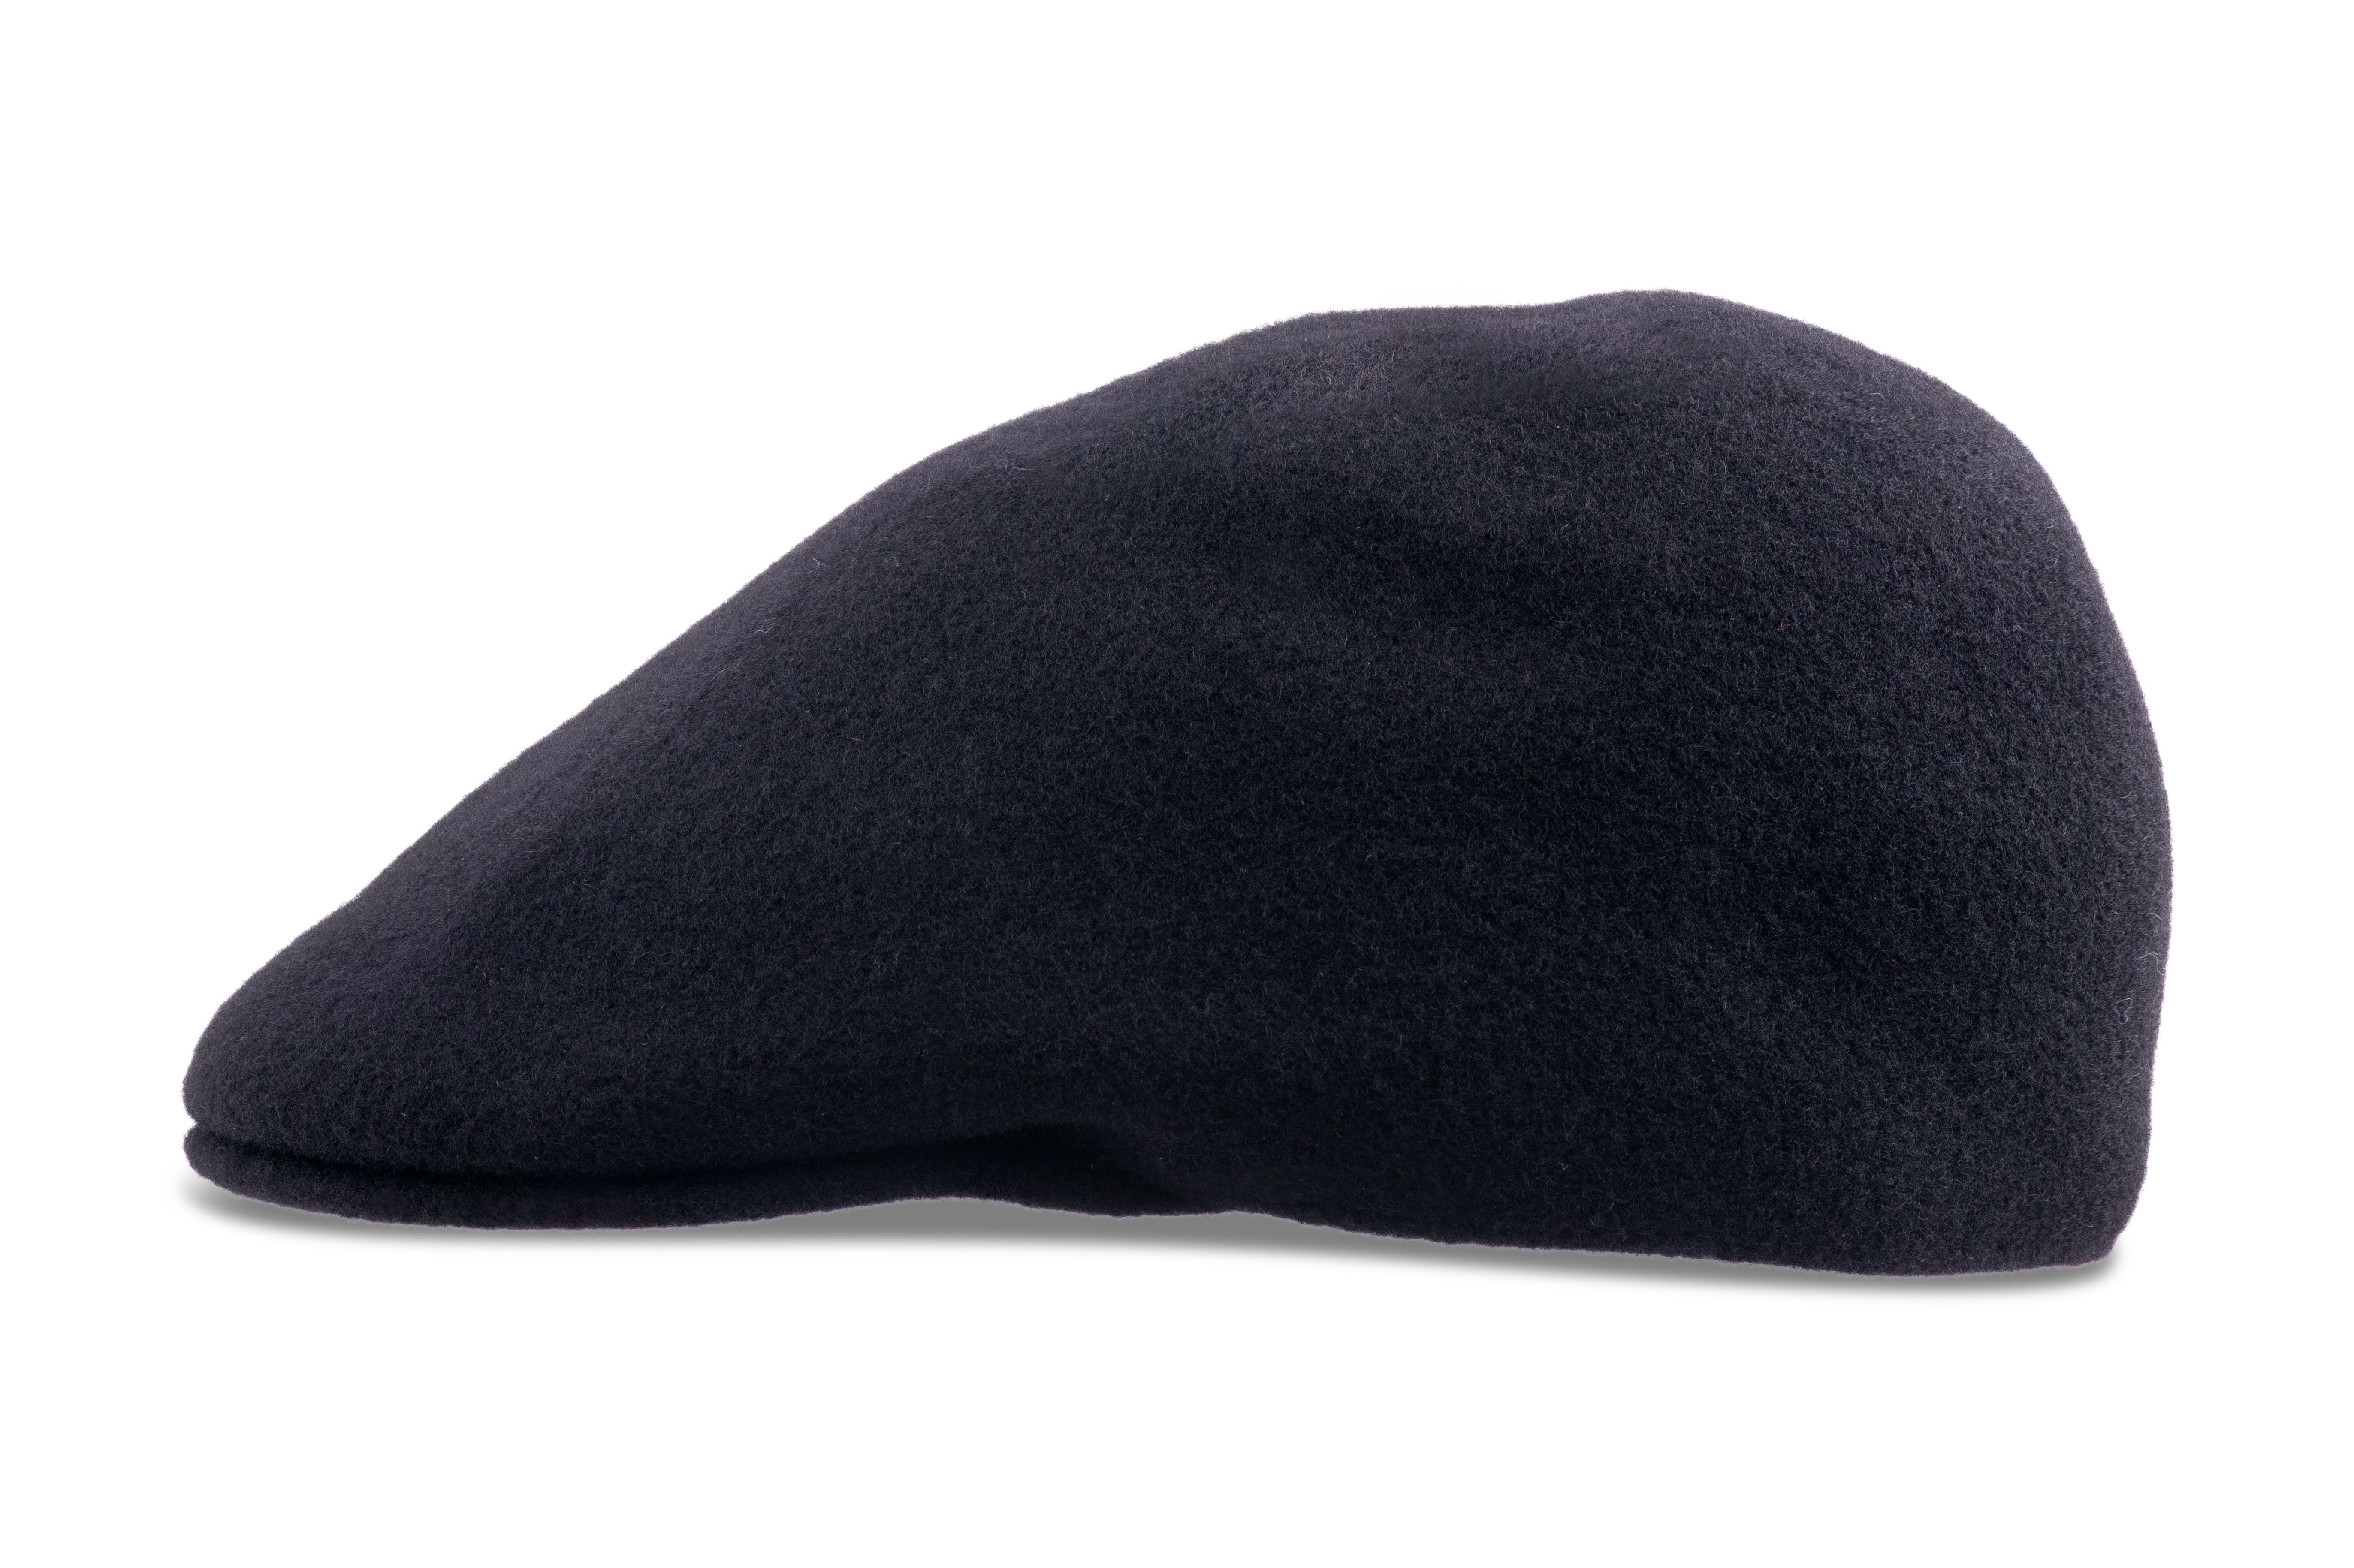 Kangol Seamless Wool 507 Felt Hat for Men and Women - Black - L